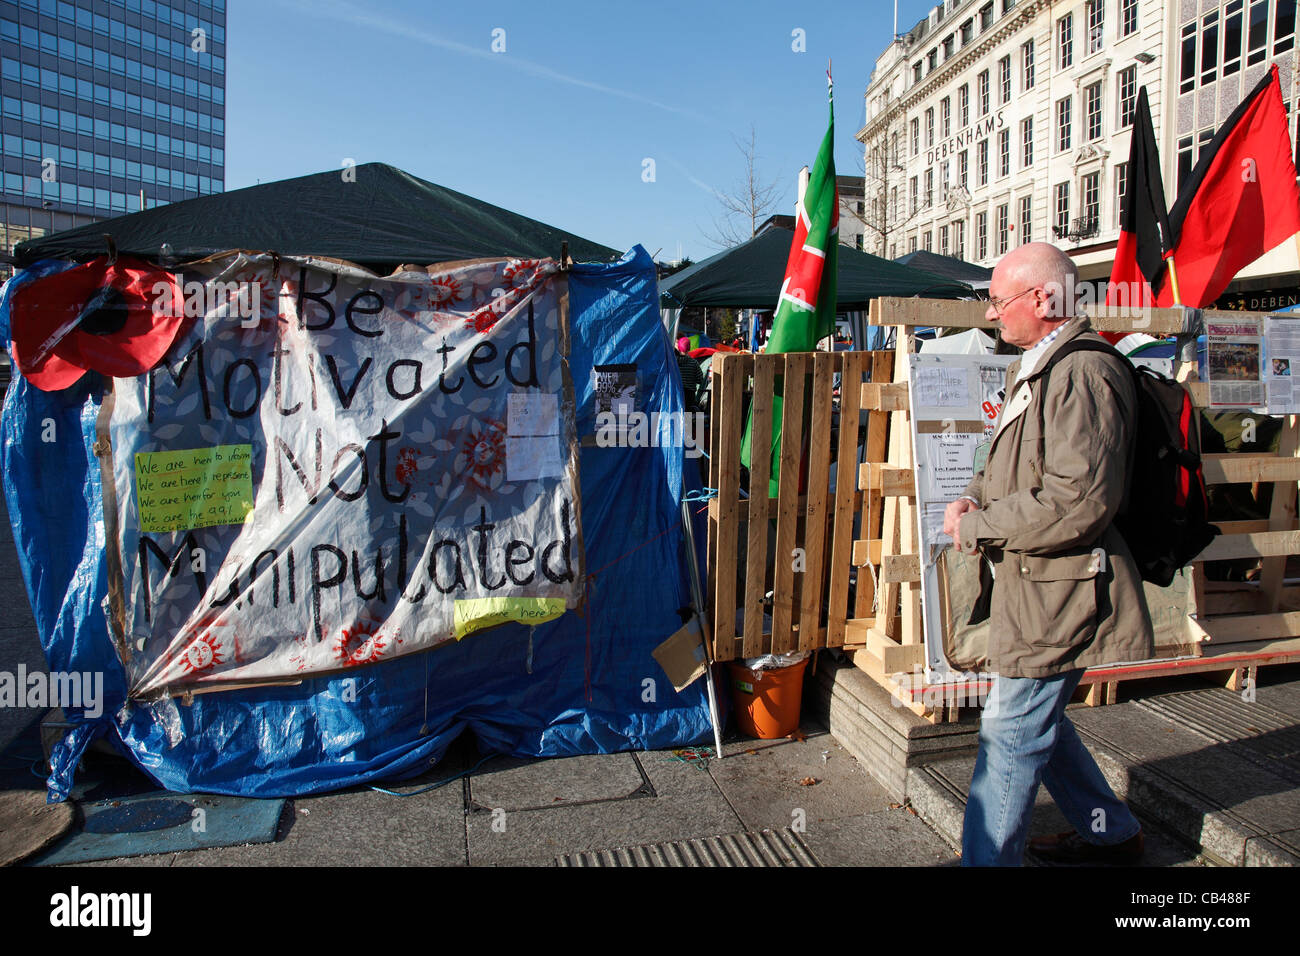 Die besetzen Notts Antikapitalismus Protest-Camp in Old Market Square, Nottingham, England, Großbritannien Stockfoto